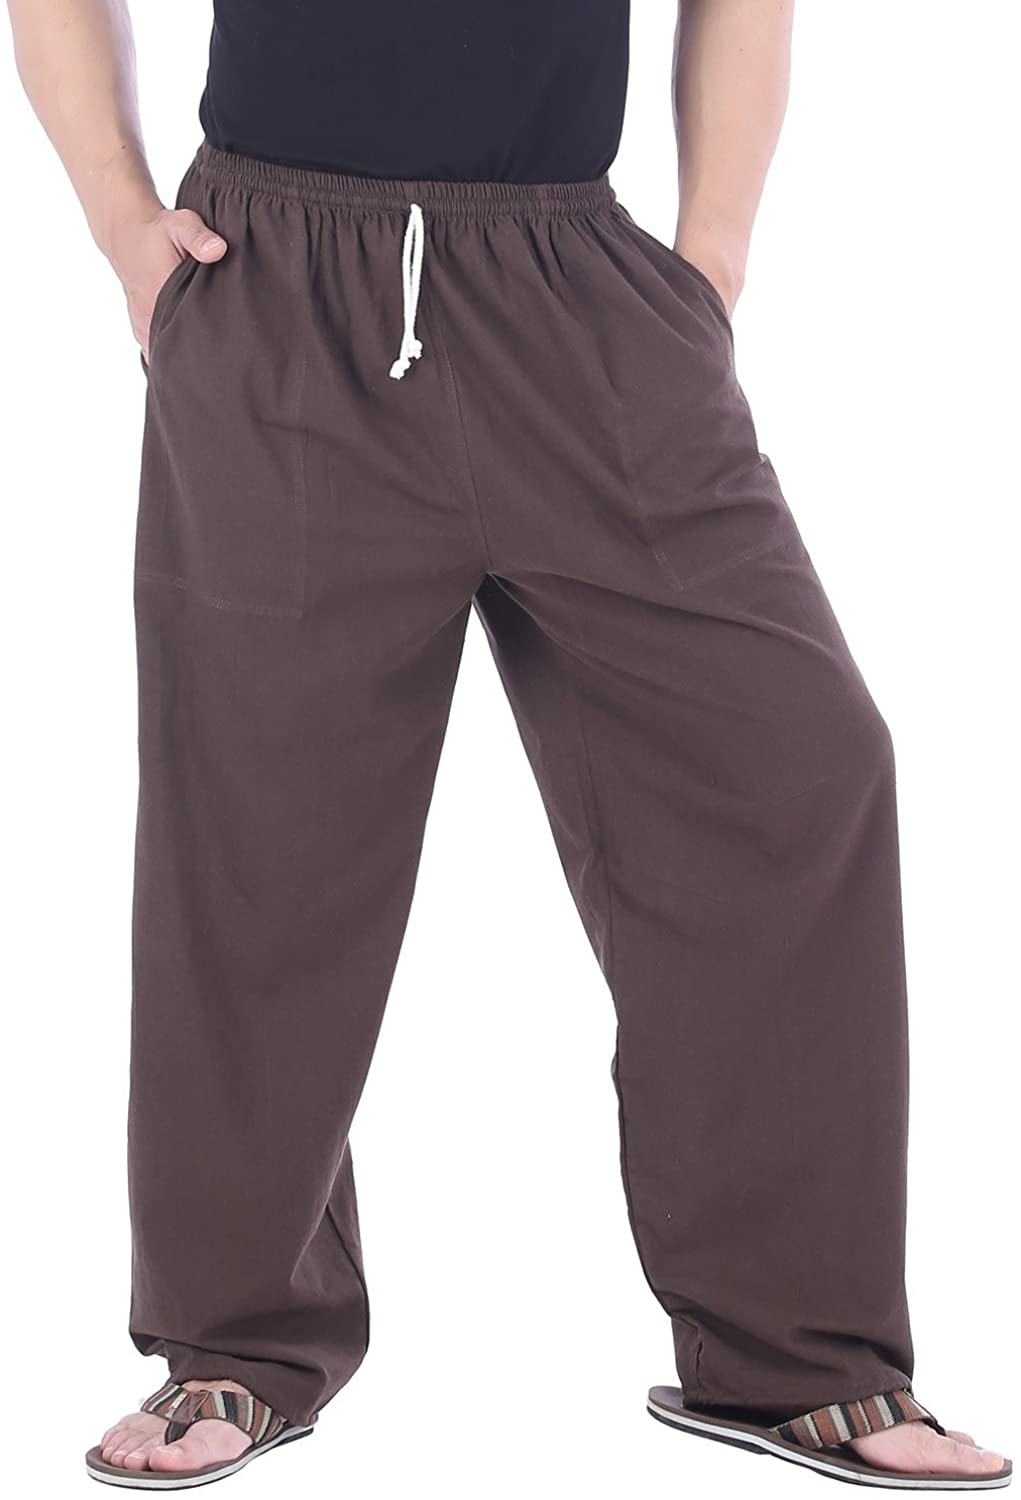 CandyHusky Mens Elastic Waist Casual Lounge Pajama Jogger Yoga Pants Cotton  | eBay